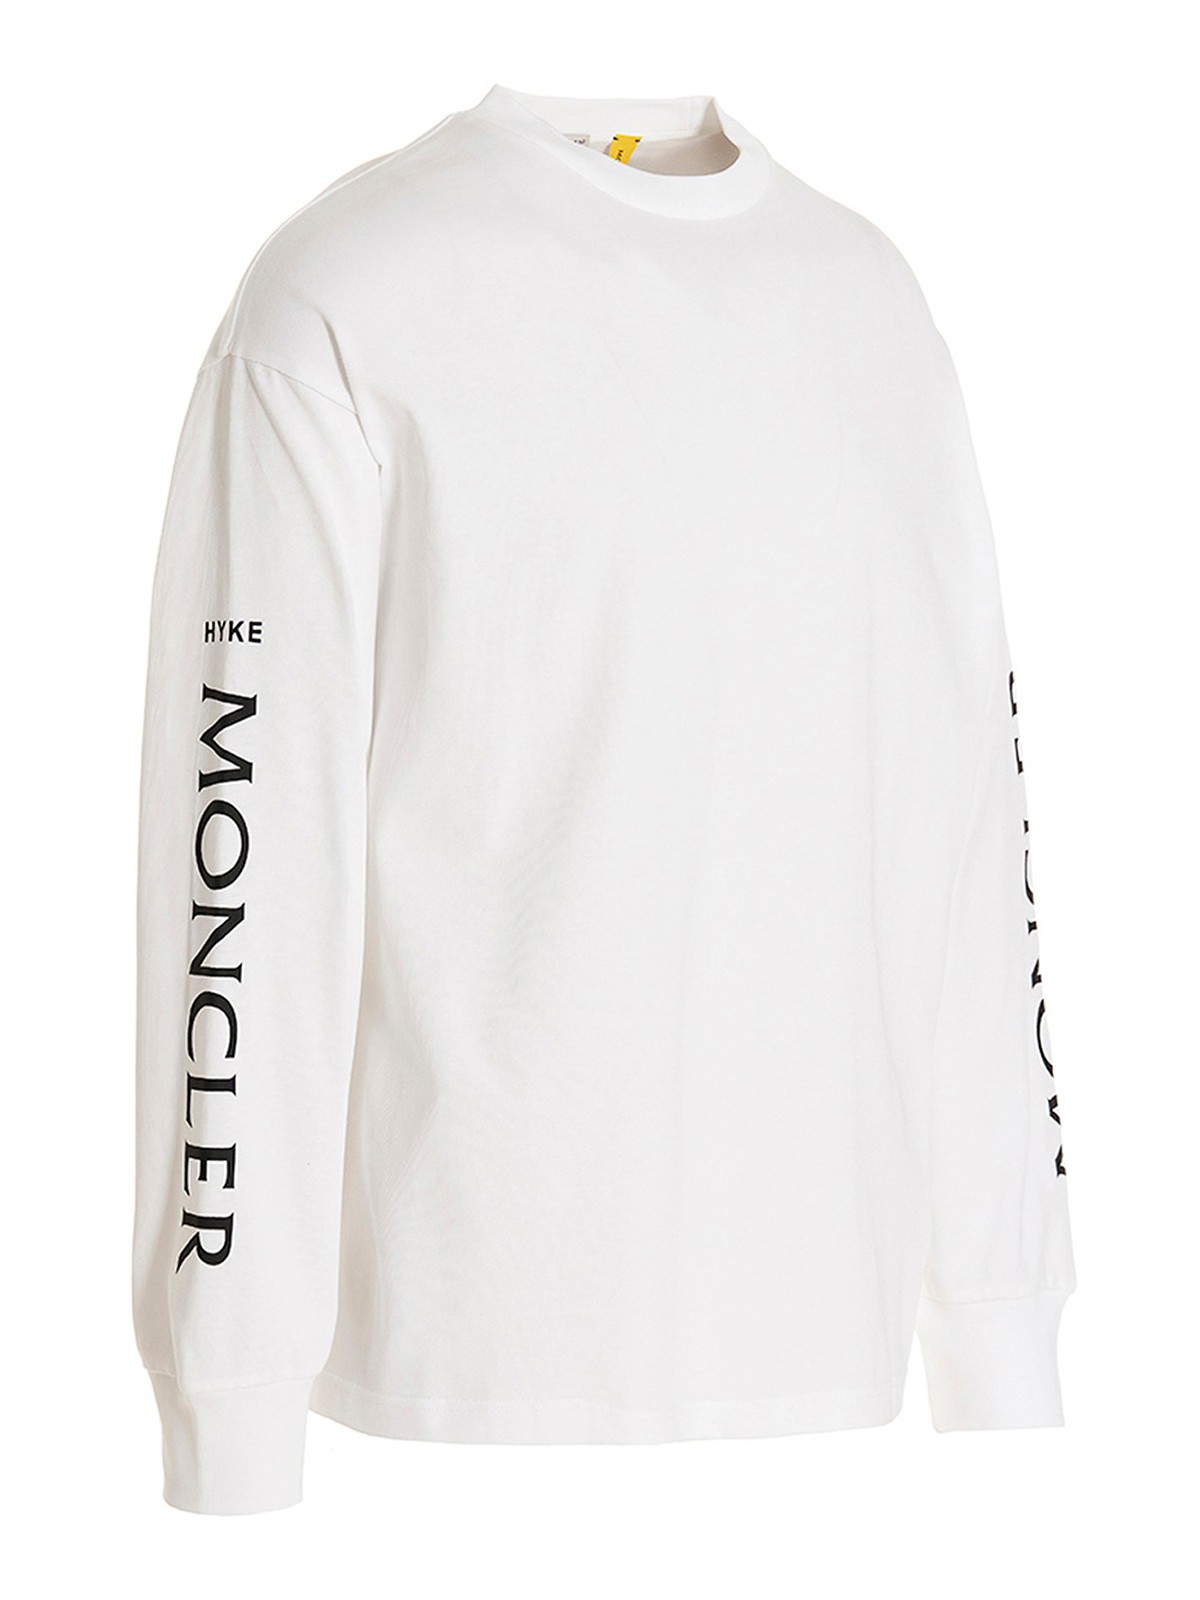 T-shirts Moncler - T-shirt capsule moncler hyke - 8D00001M2546001